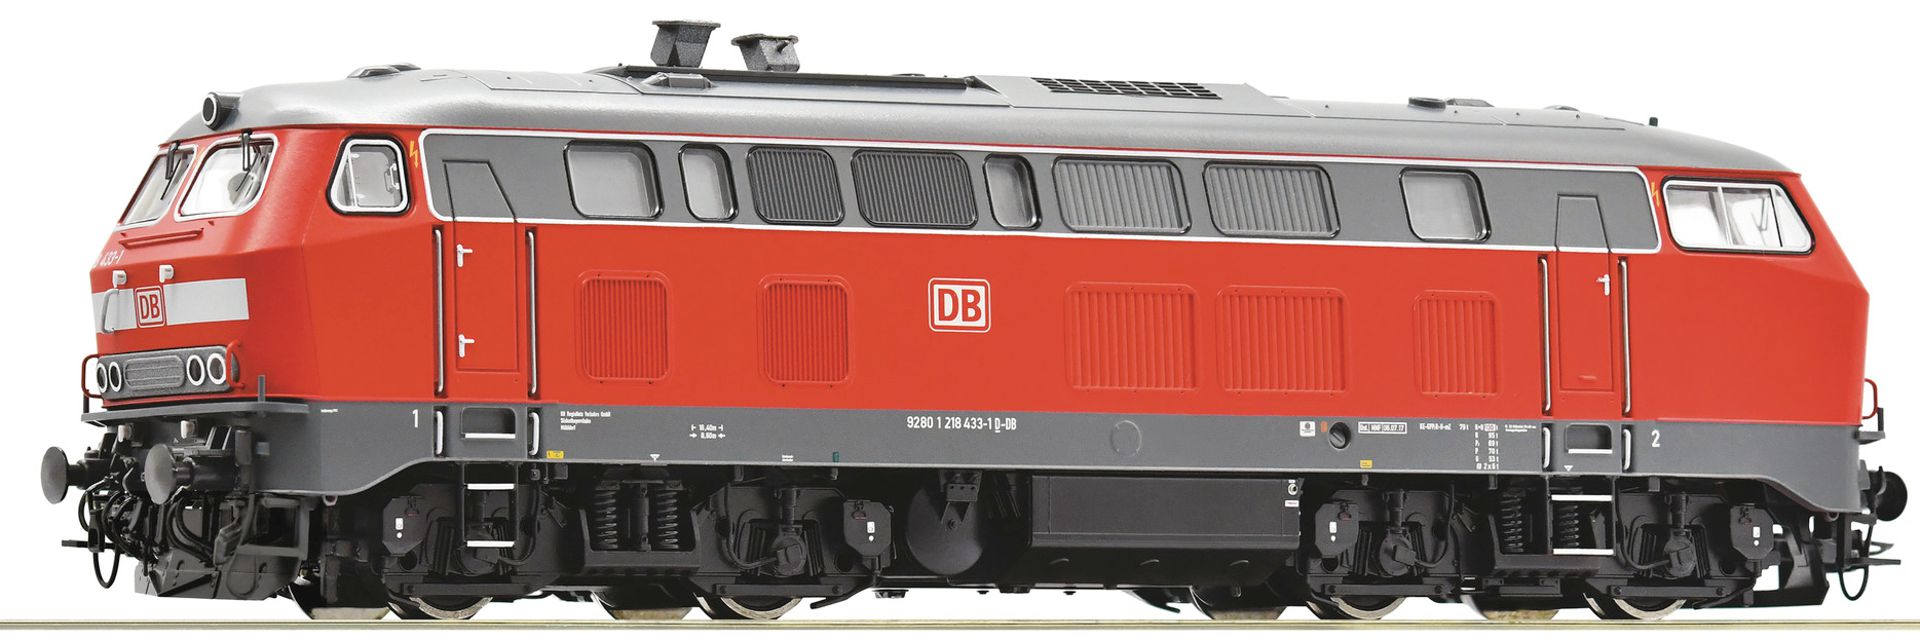 Roco 7320053 - Diesellok 218 433-1, DBAG, Ep.VI, AC-Sound